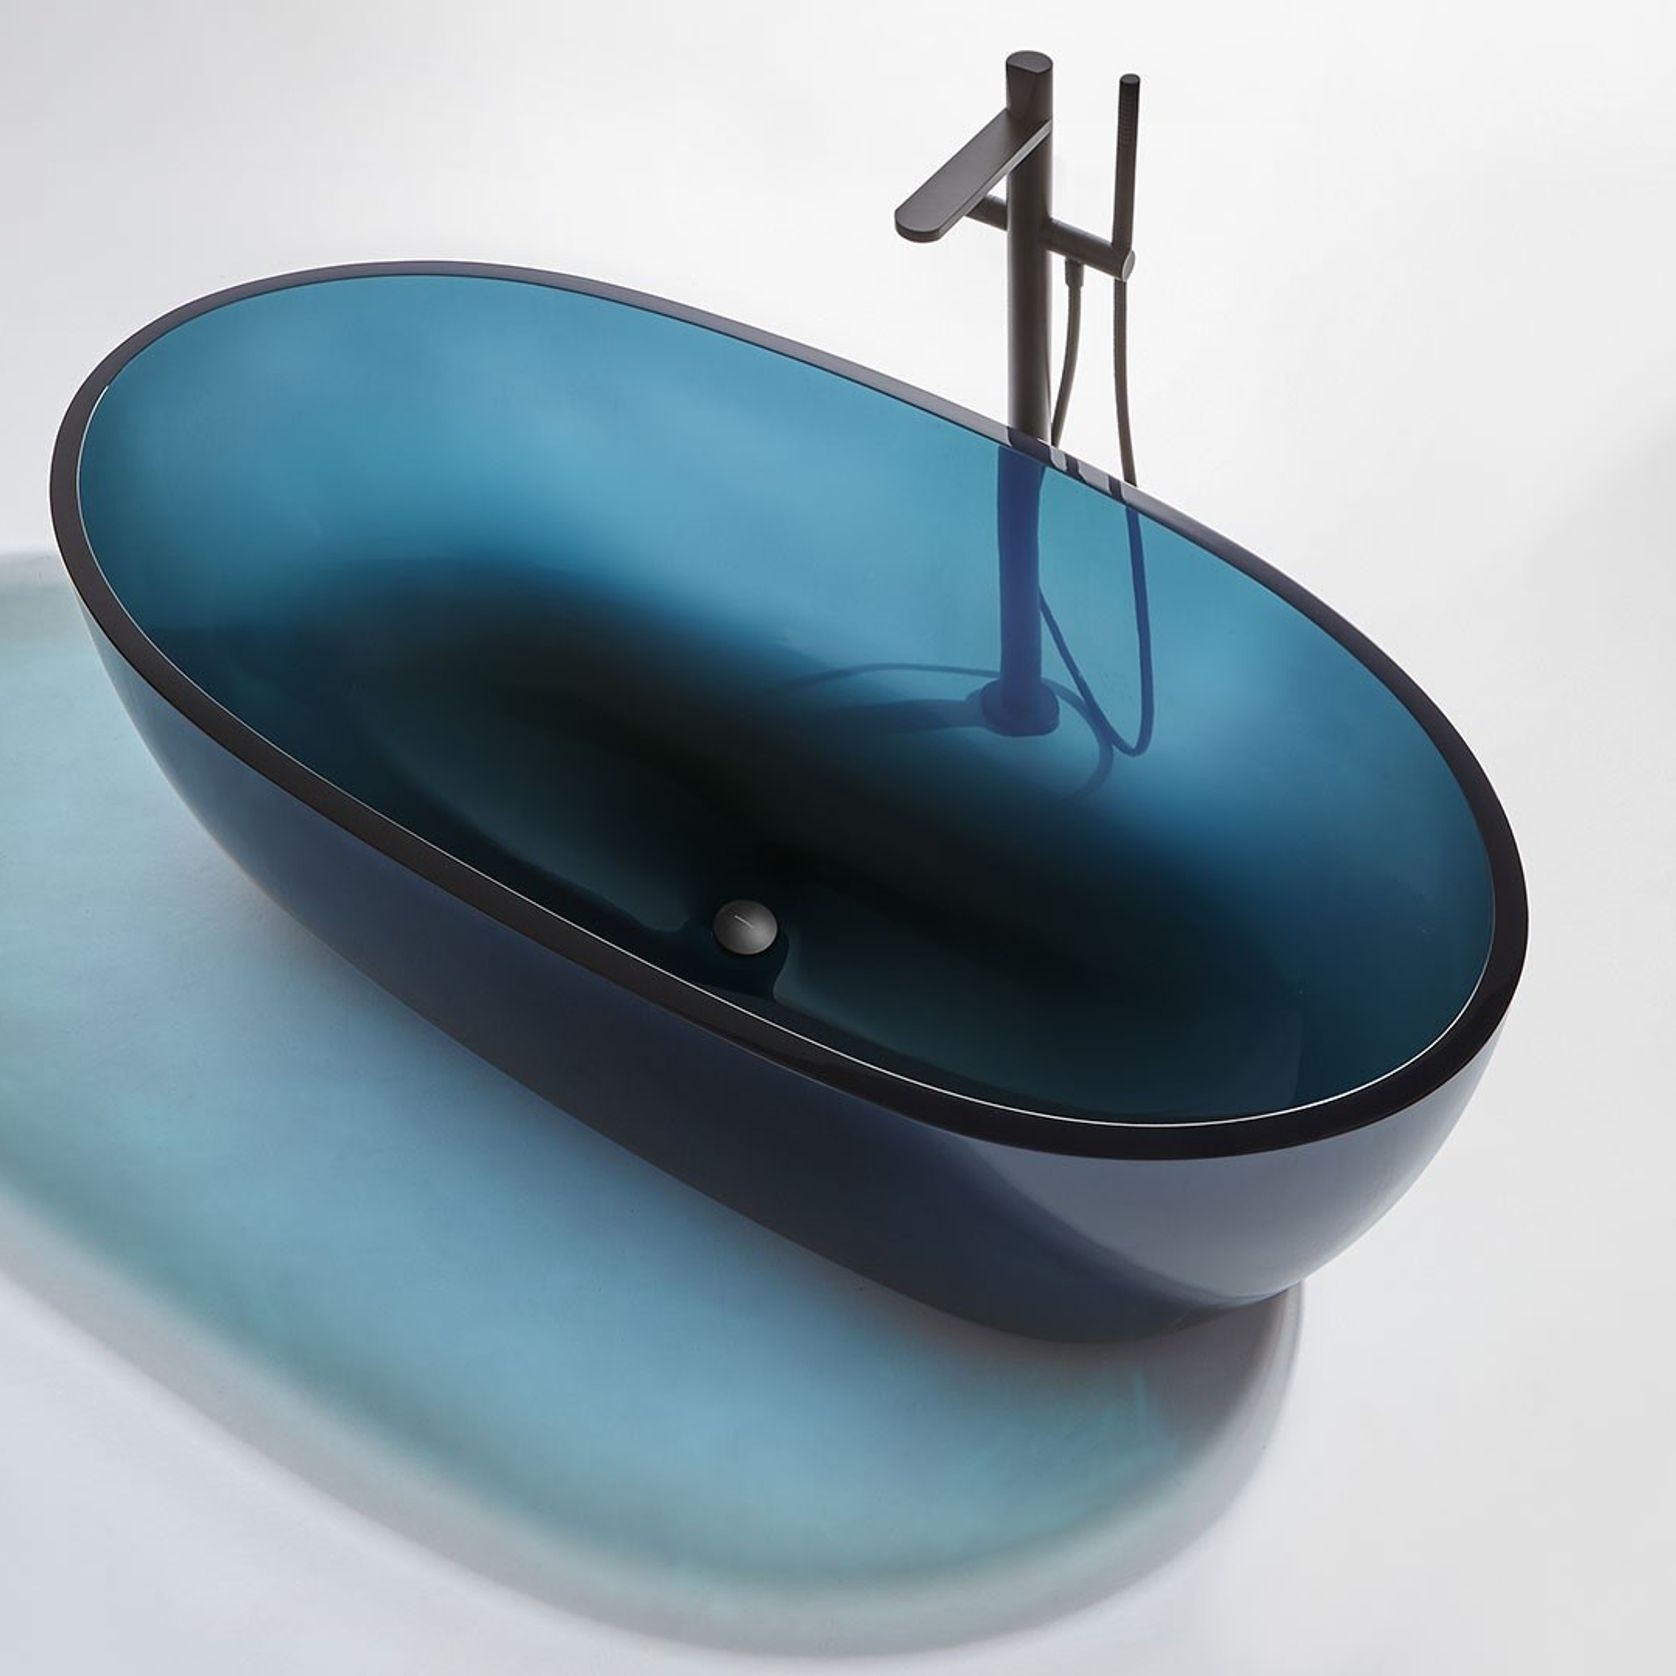 Reflex Bath by Antoniolupi gallery detail image